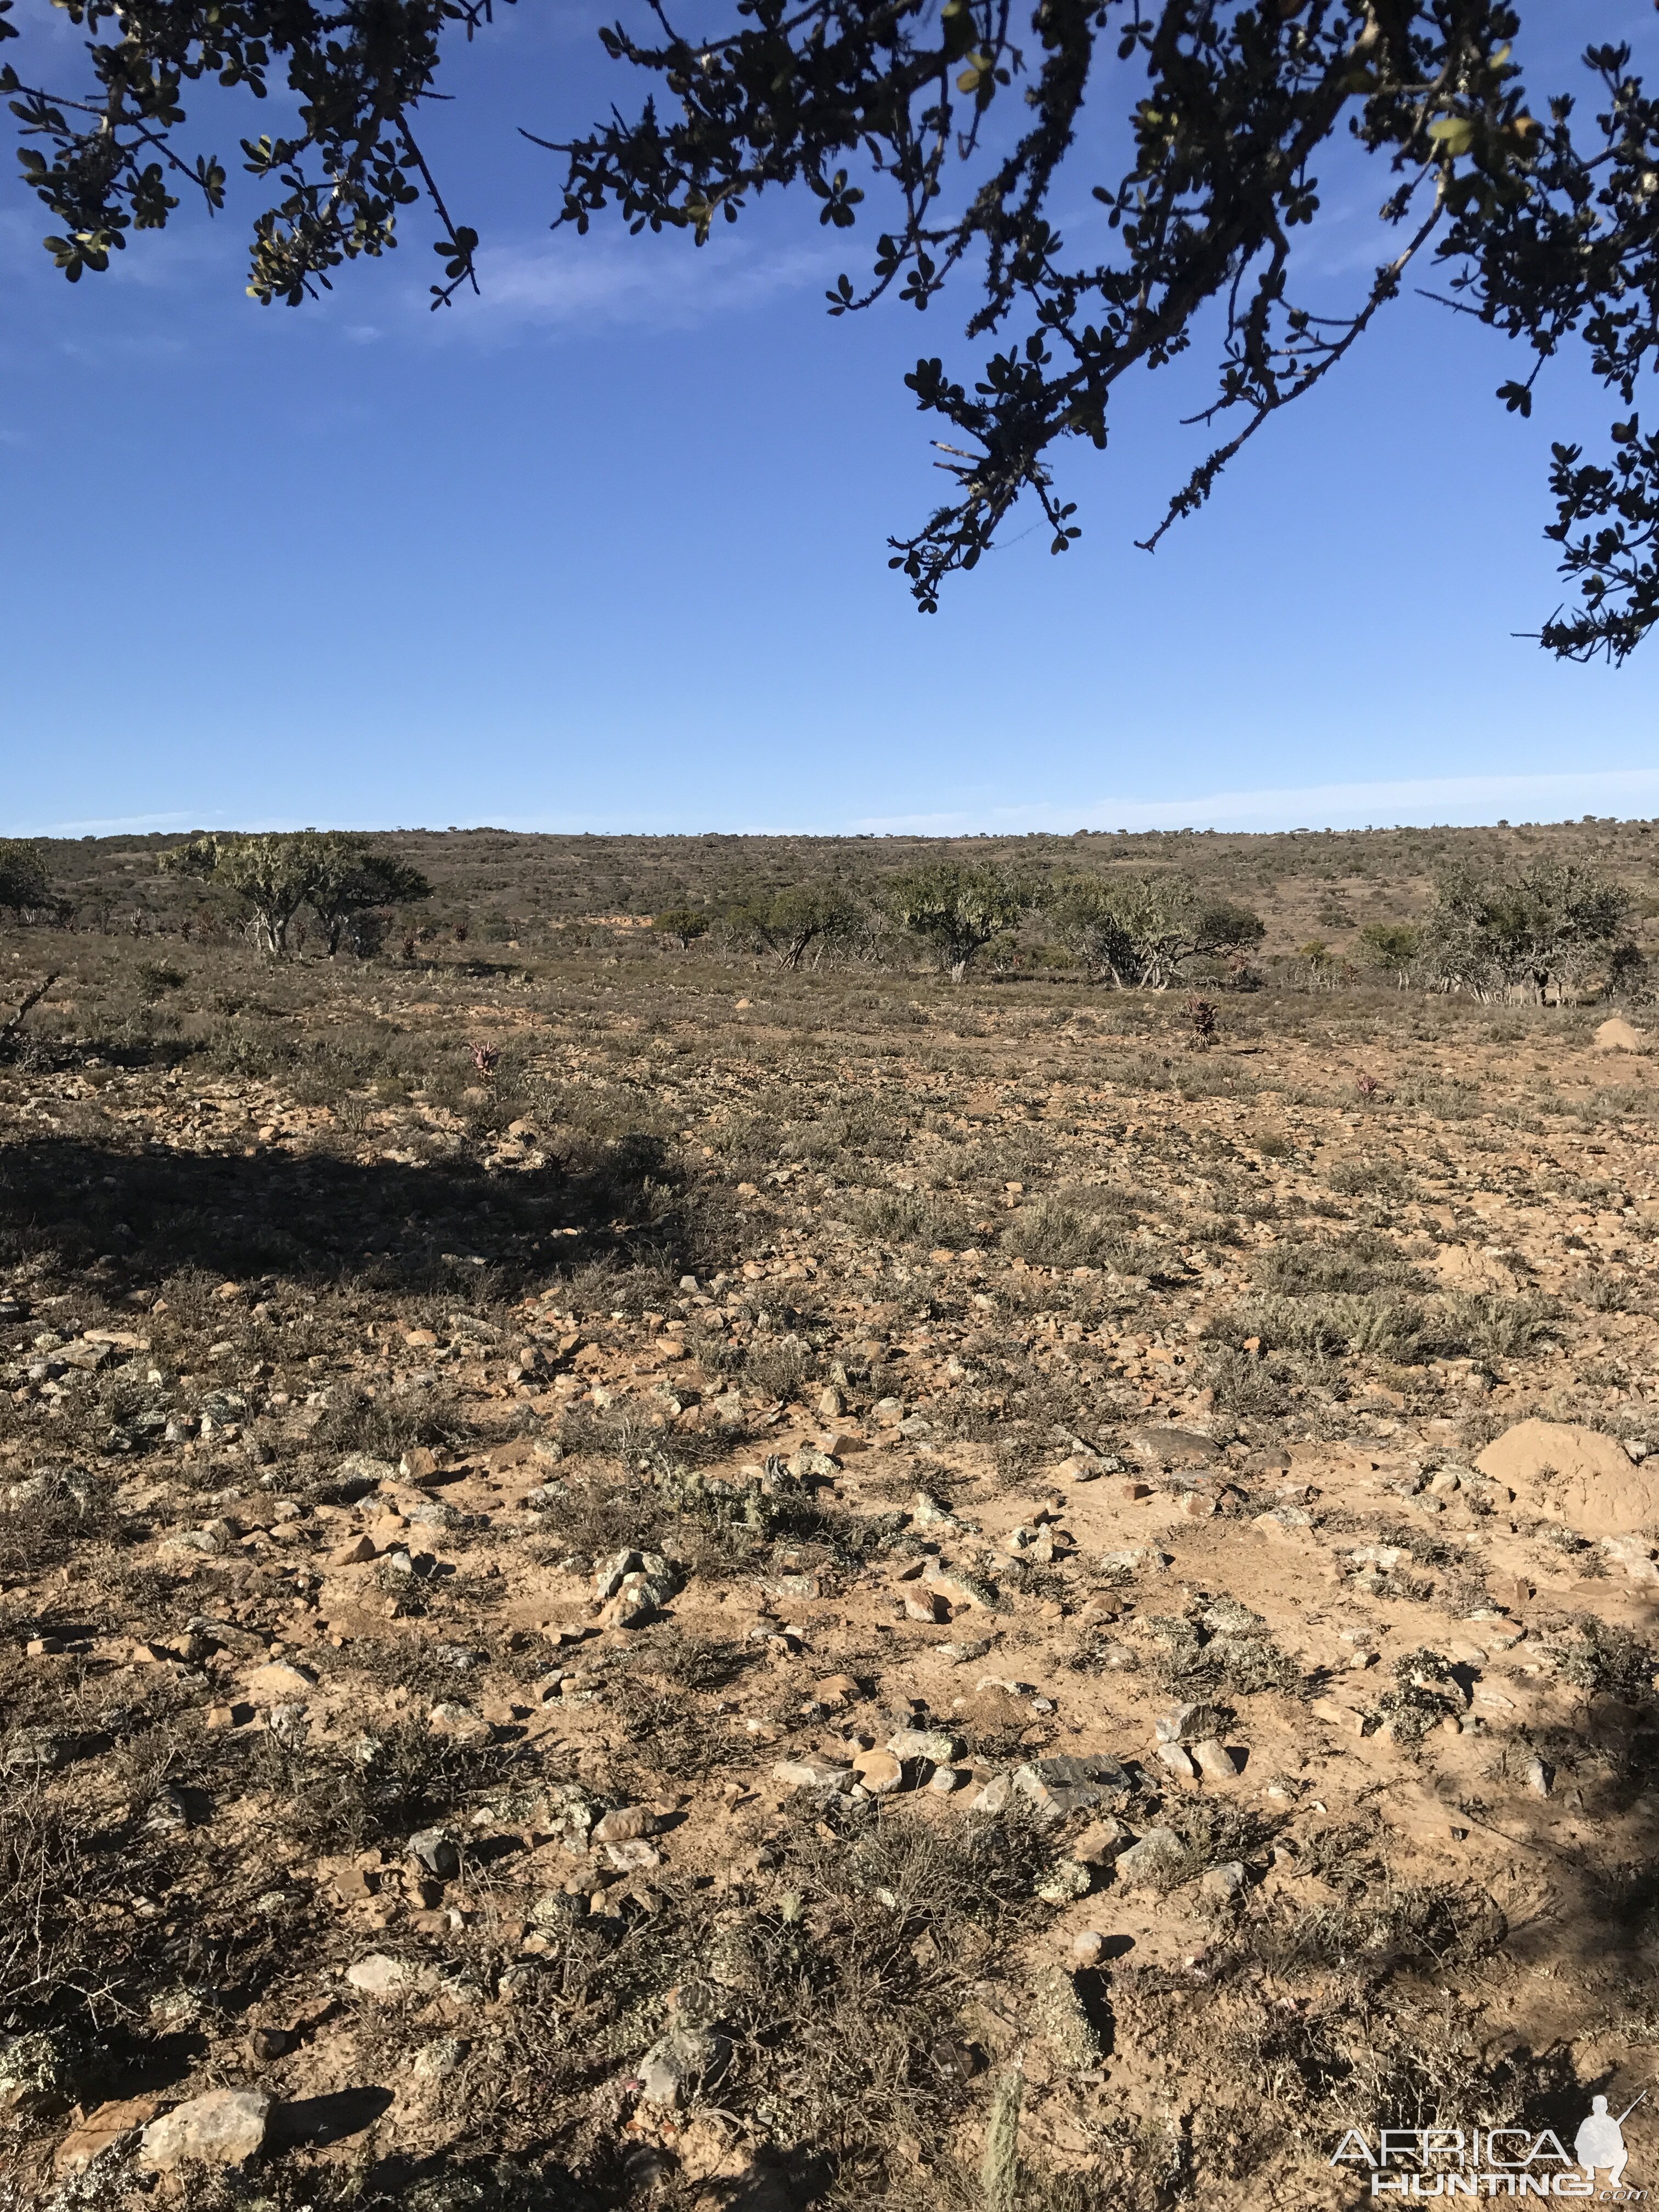 Hunting Springbok in South Africa